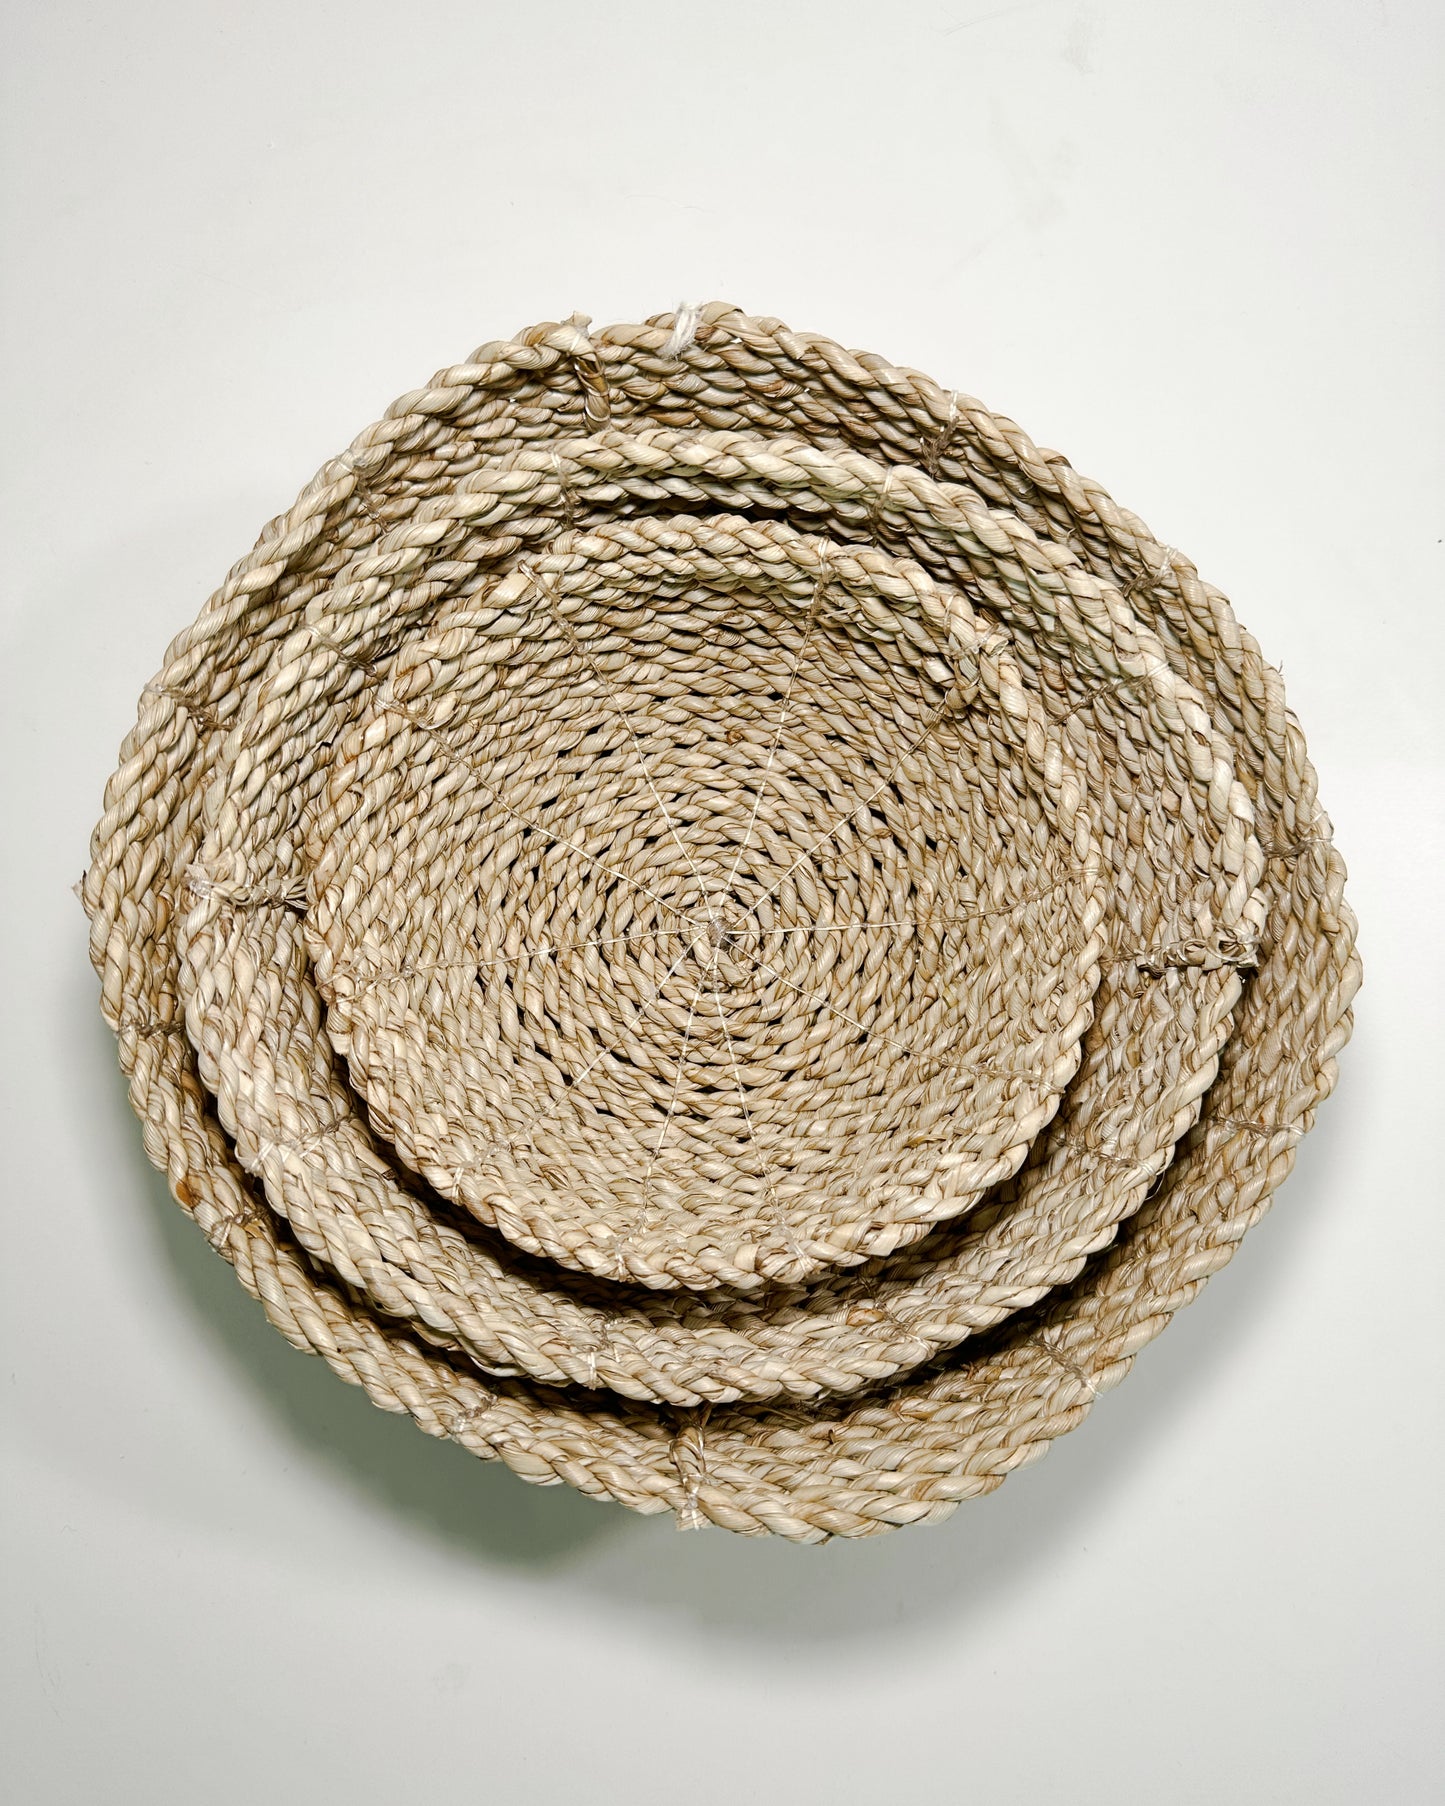 Mimpi Handwoven Bread Baskets (Set of 3) - Natural